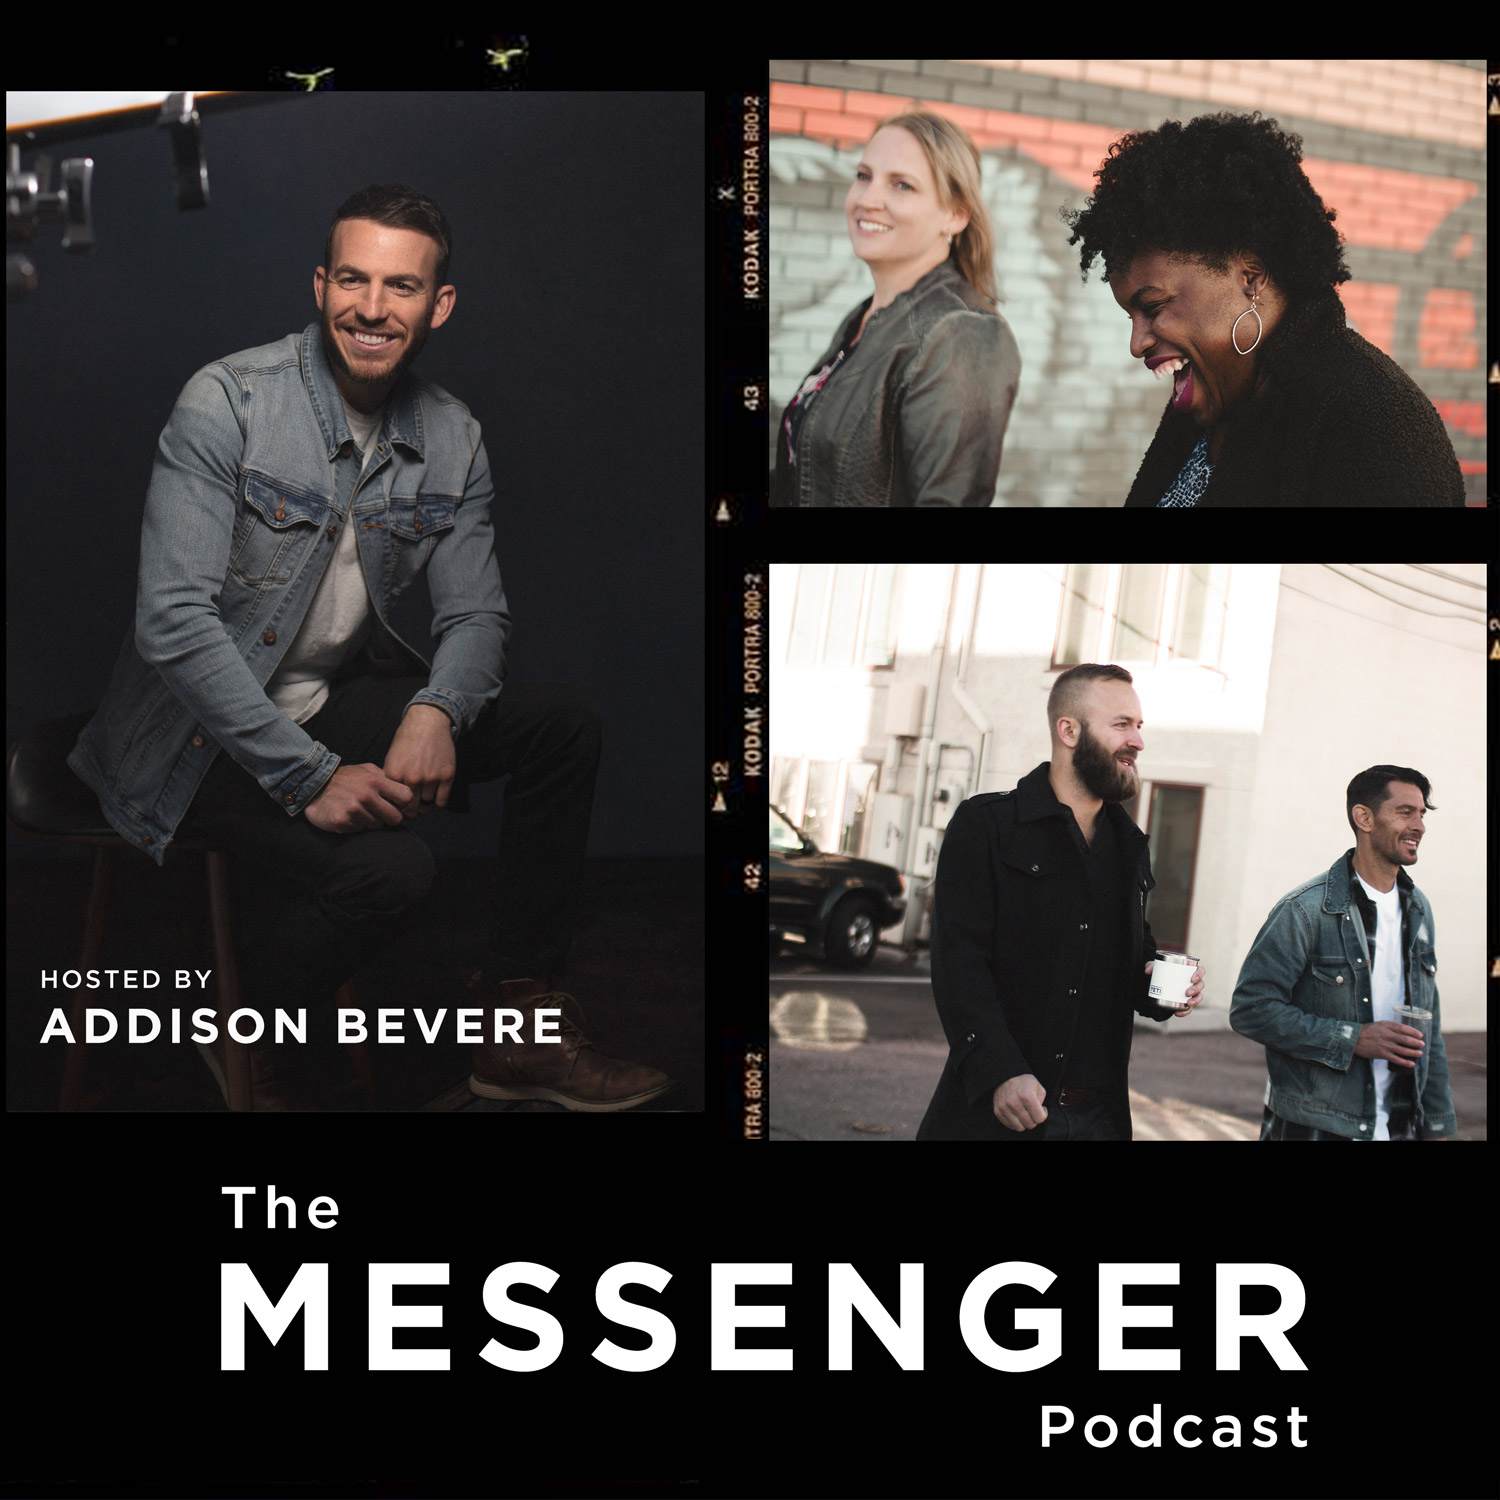 The Messenger Podcast